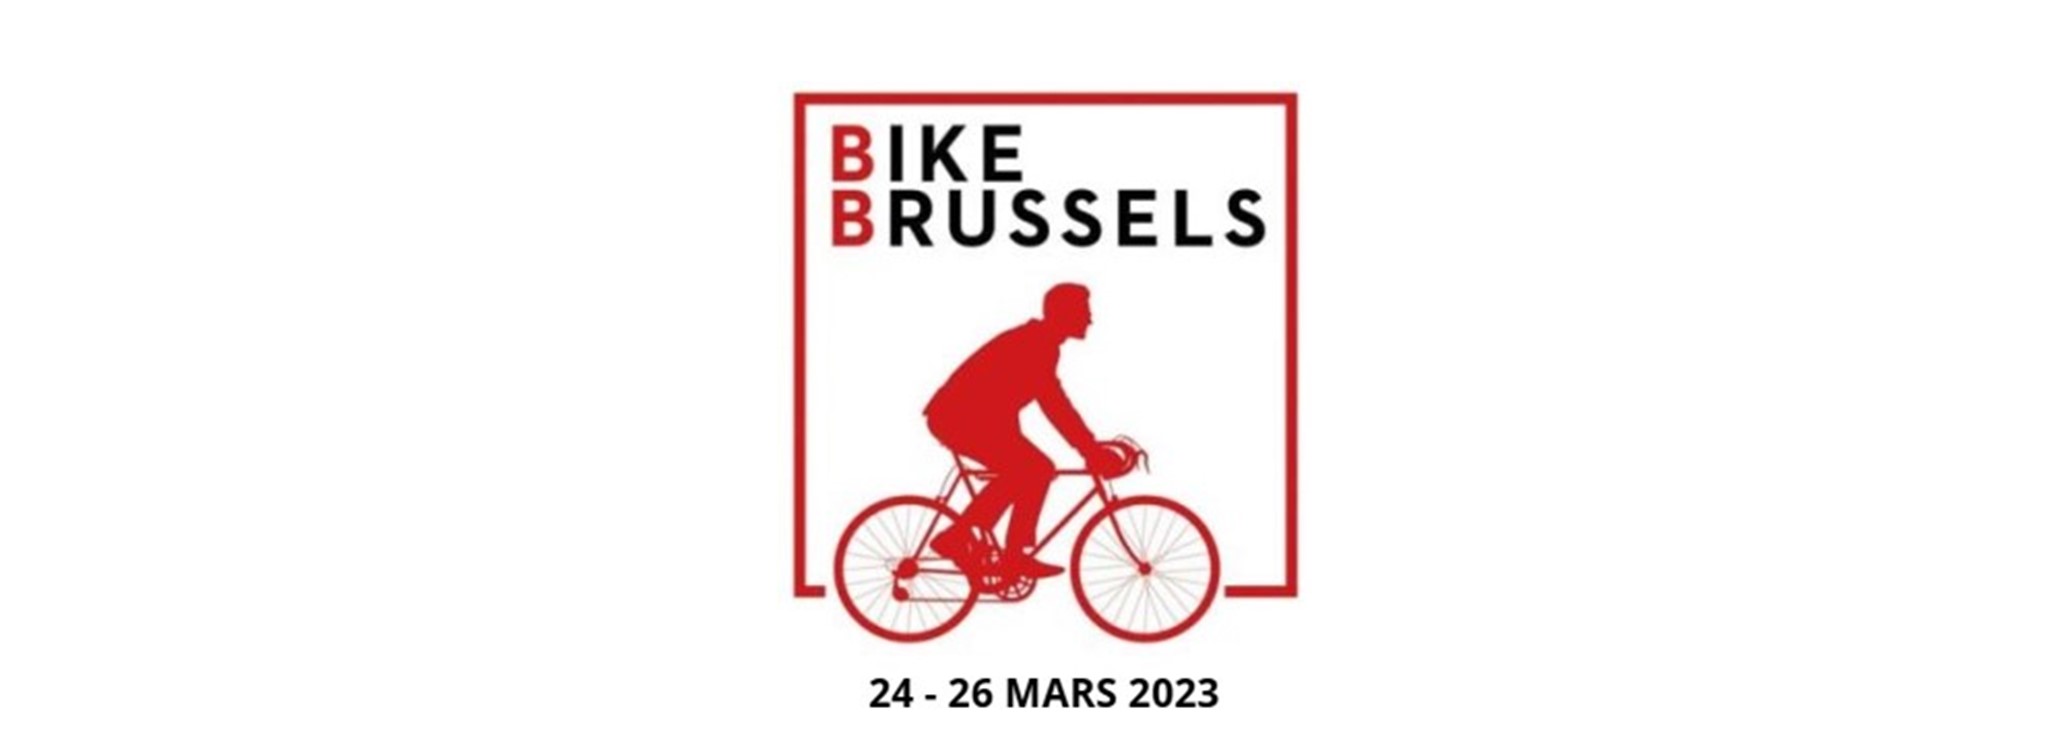 Bike Brussels, du 24 au 26 mars 2023